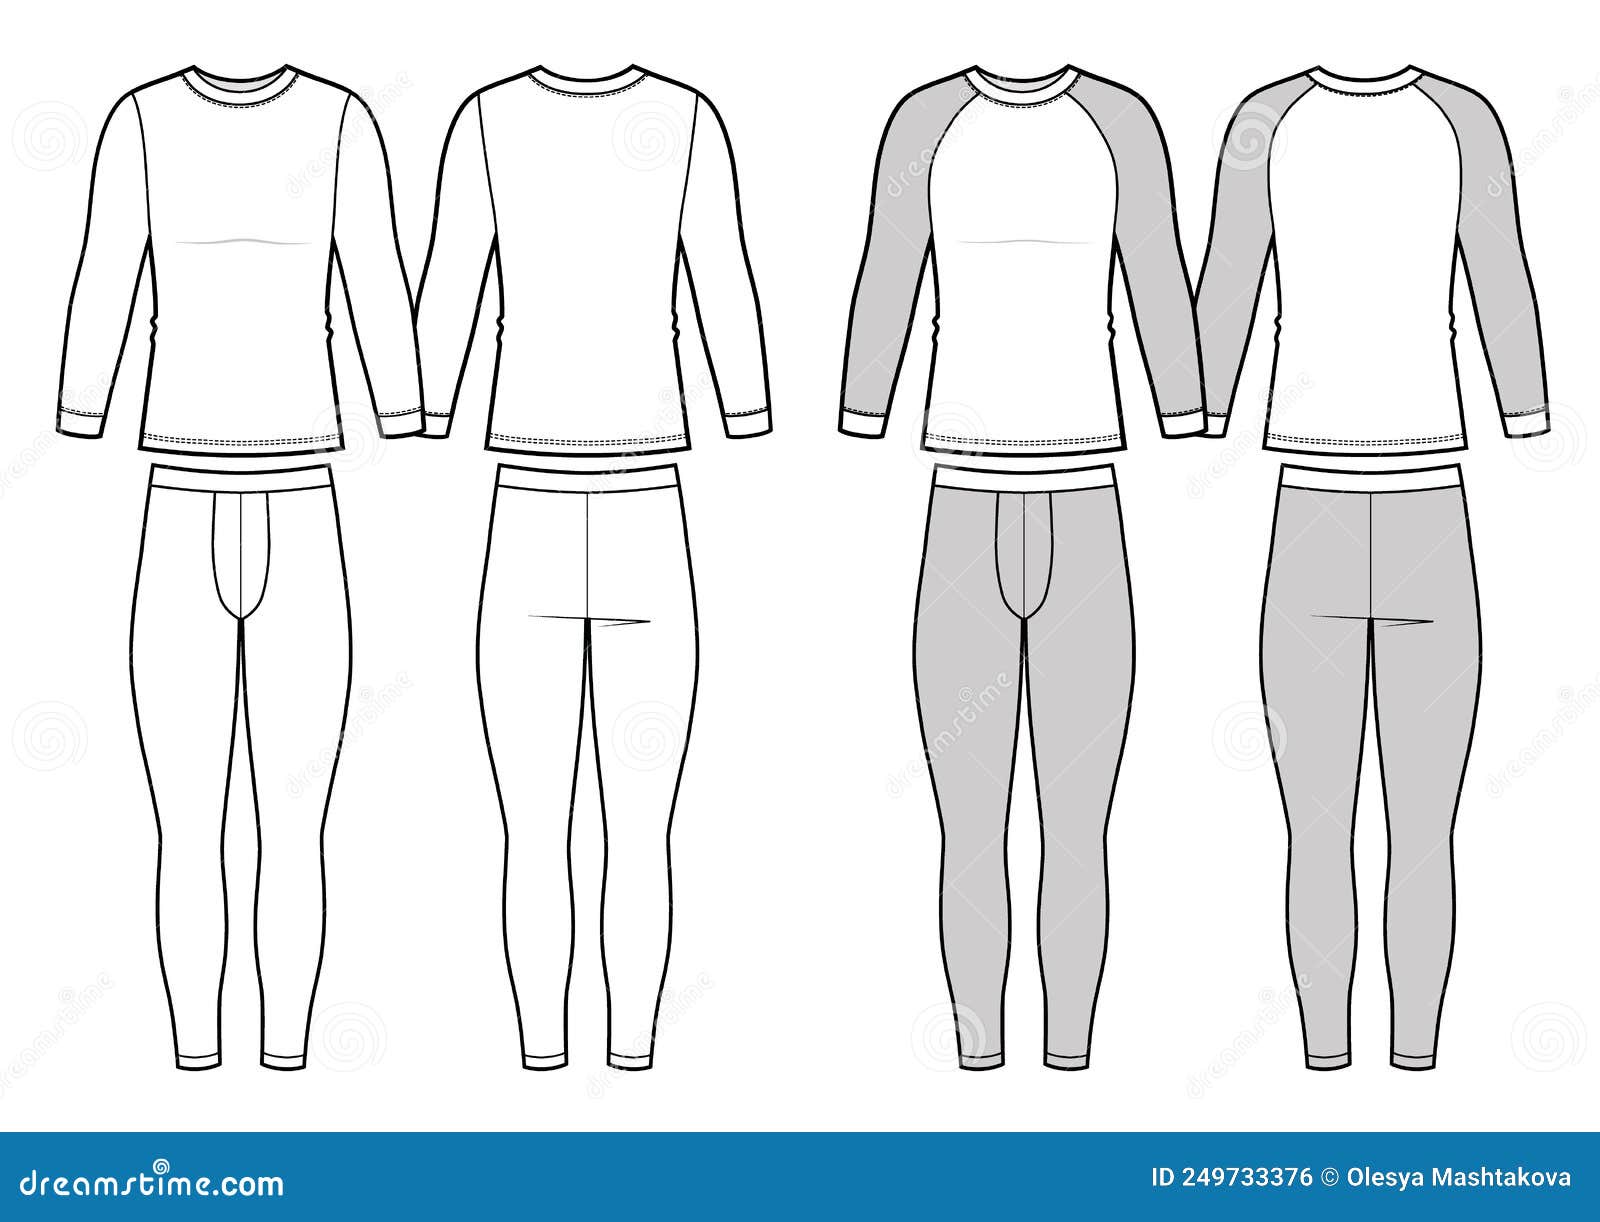 Blank Men S Sleepwear in Front, Back Views. Stock Vector - Illustration ...